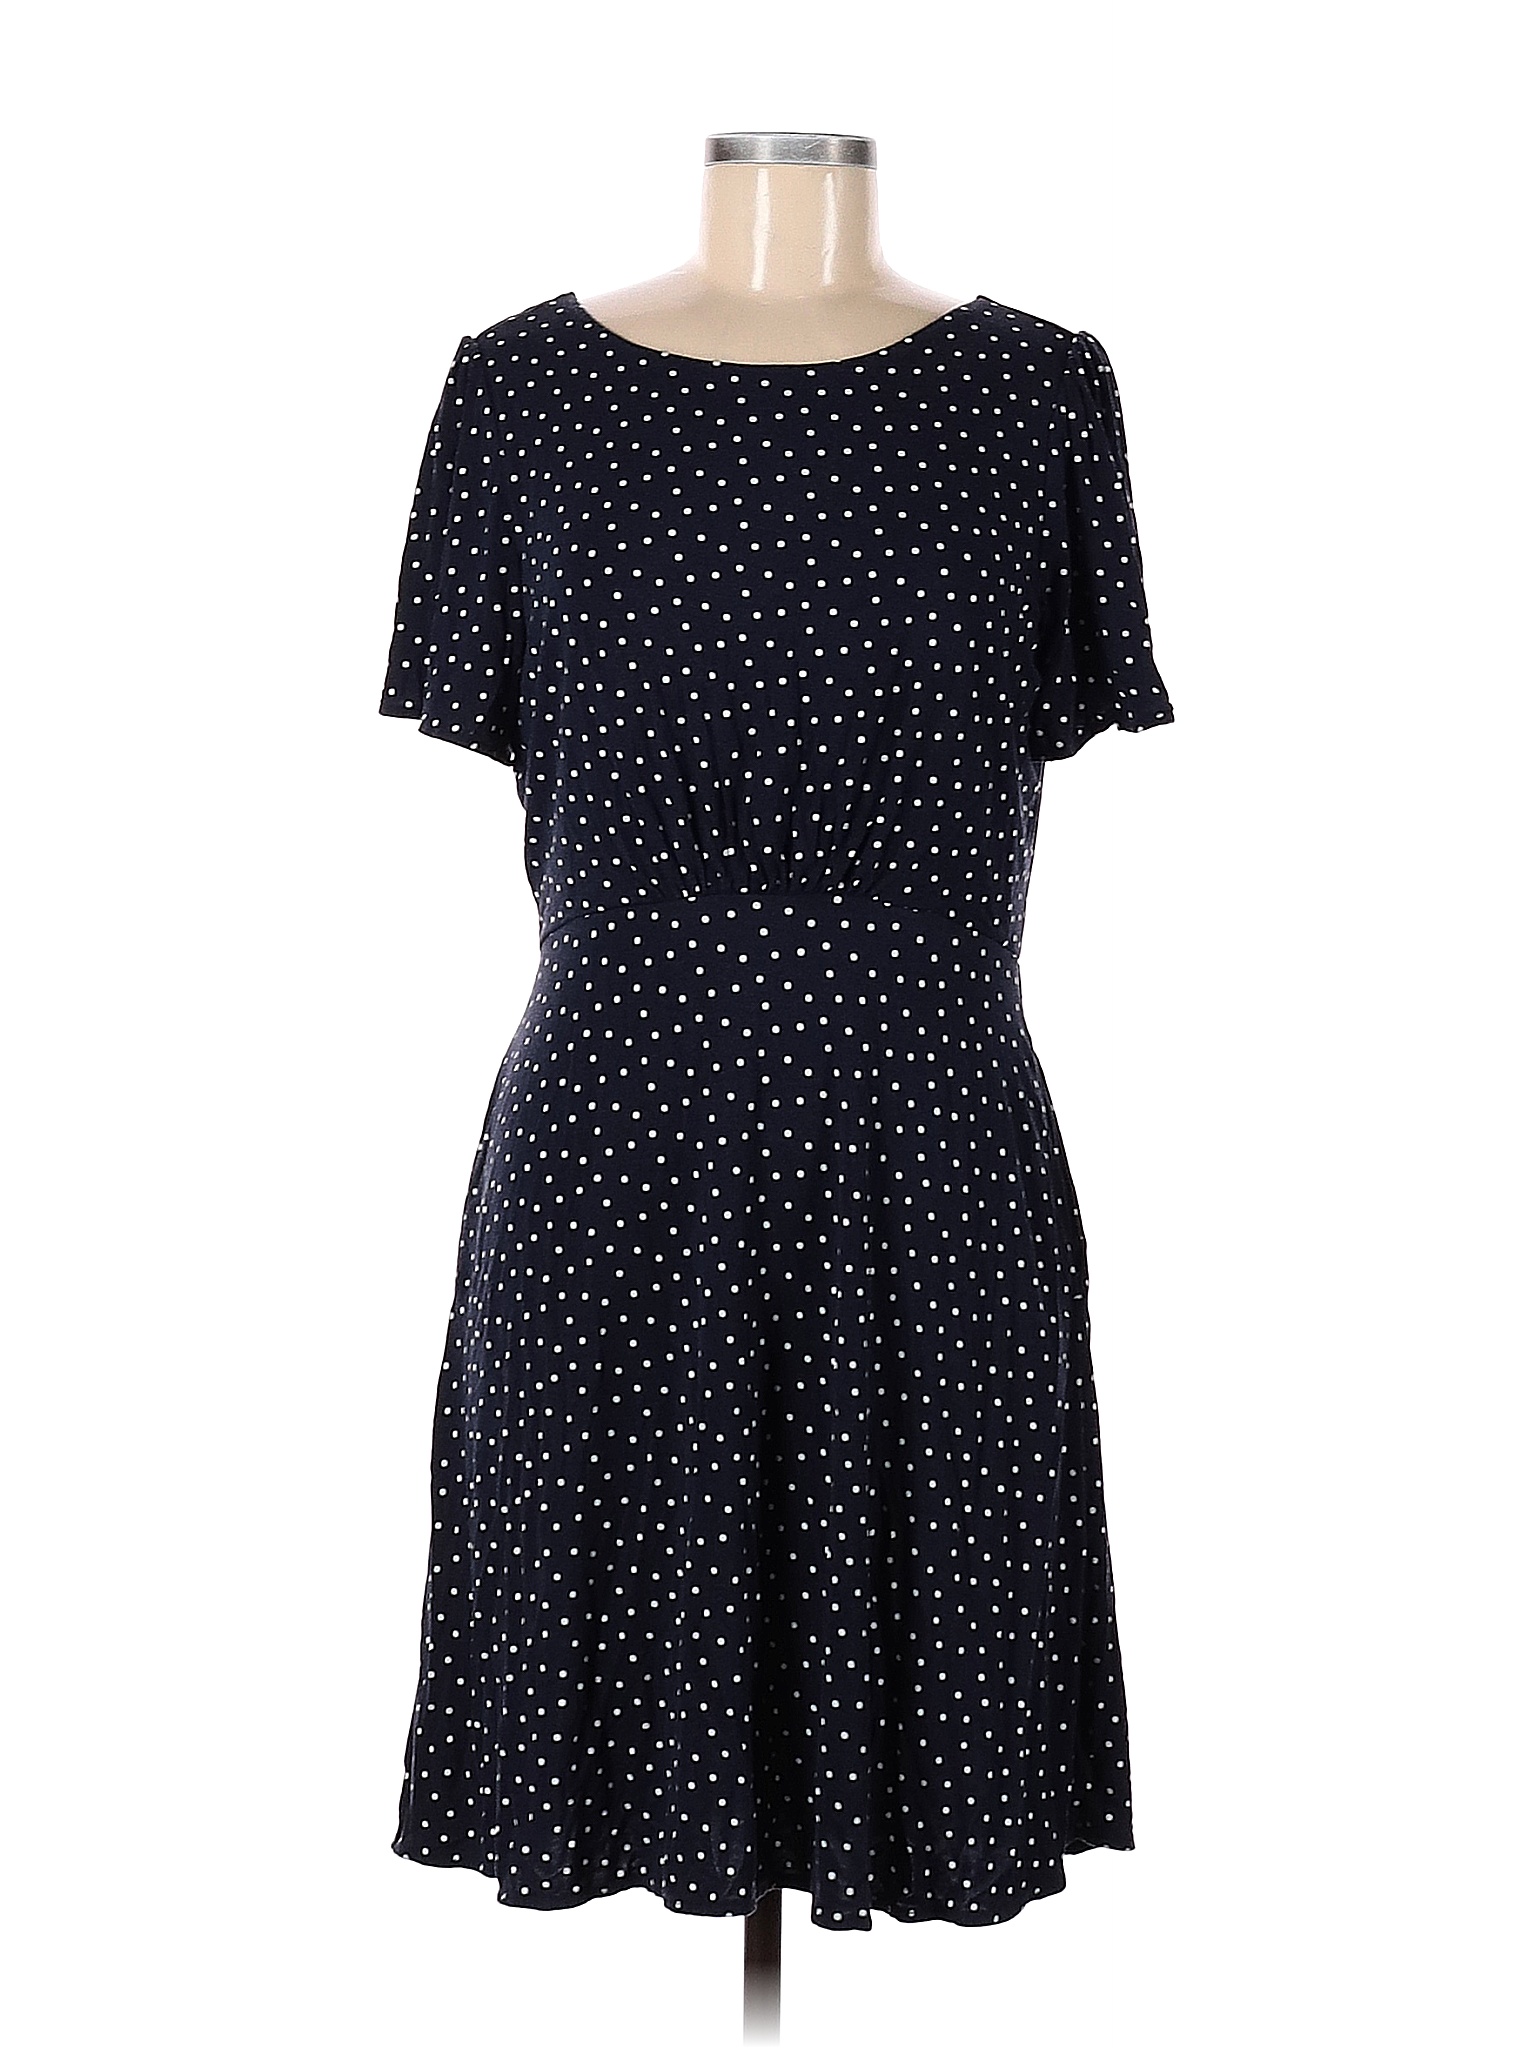 Ann Taylor LOFT Polka Dots Black Blue Casual Dress Size 8 - 80% off ...